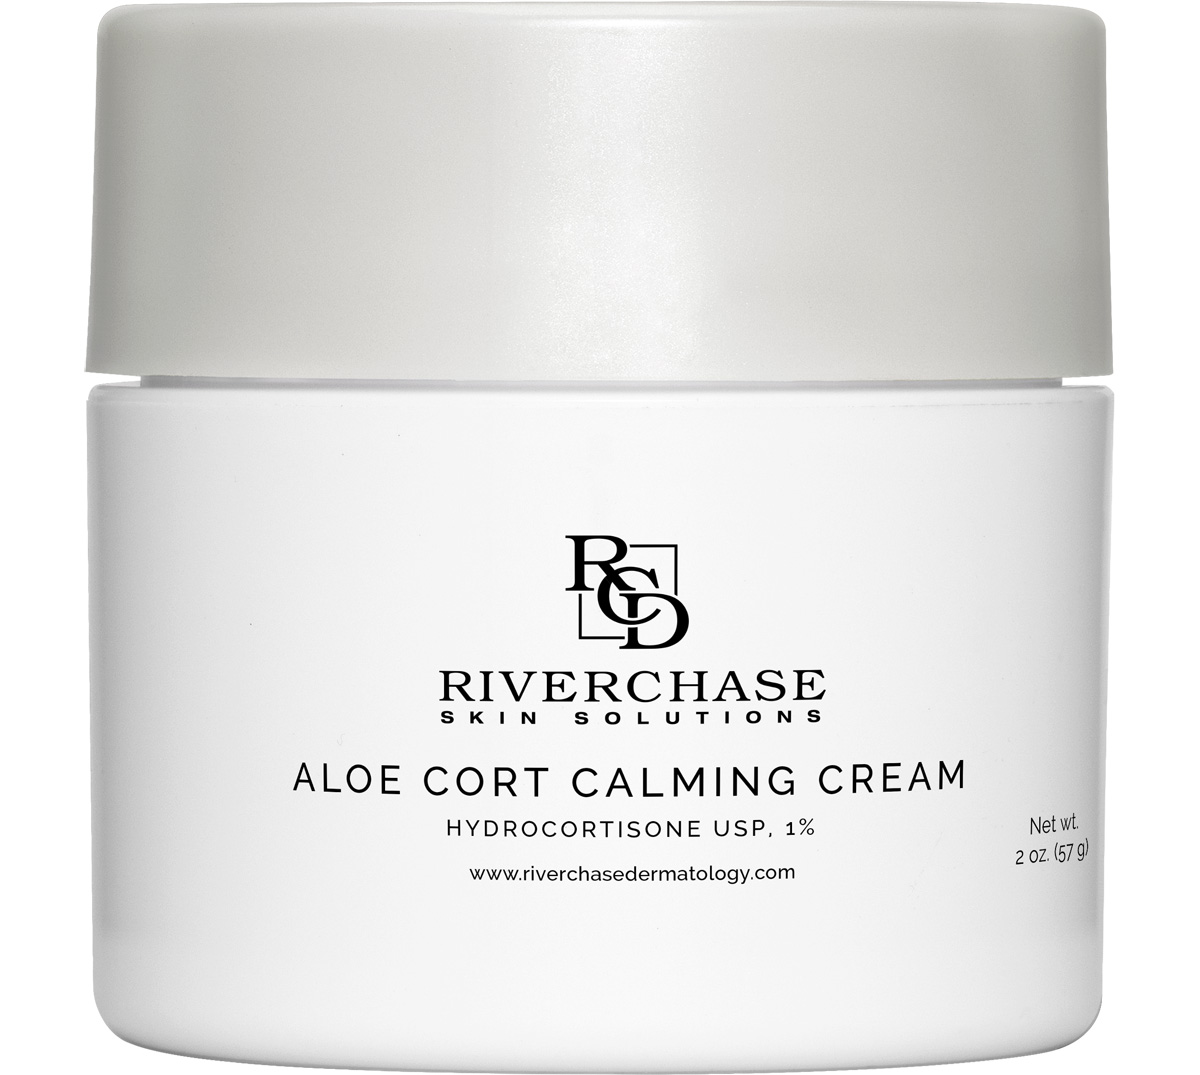 Aloe Cort Calming Cream